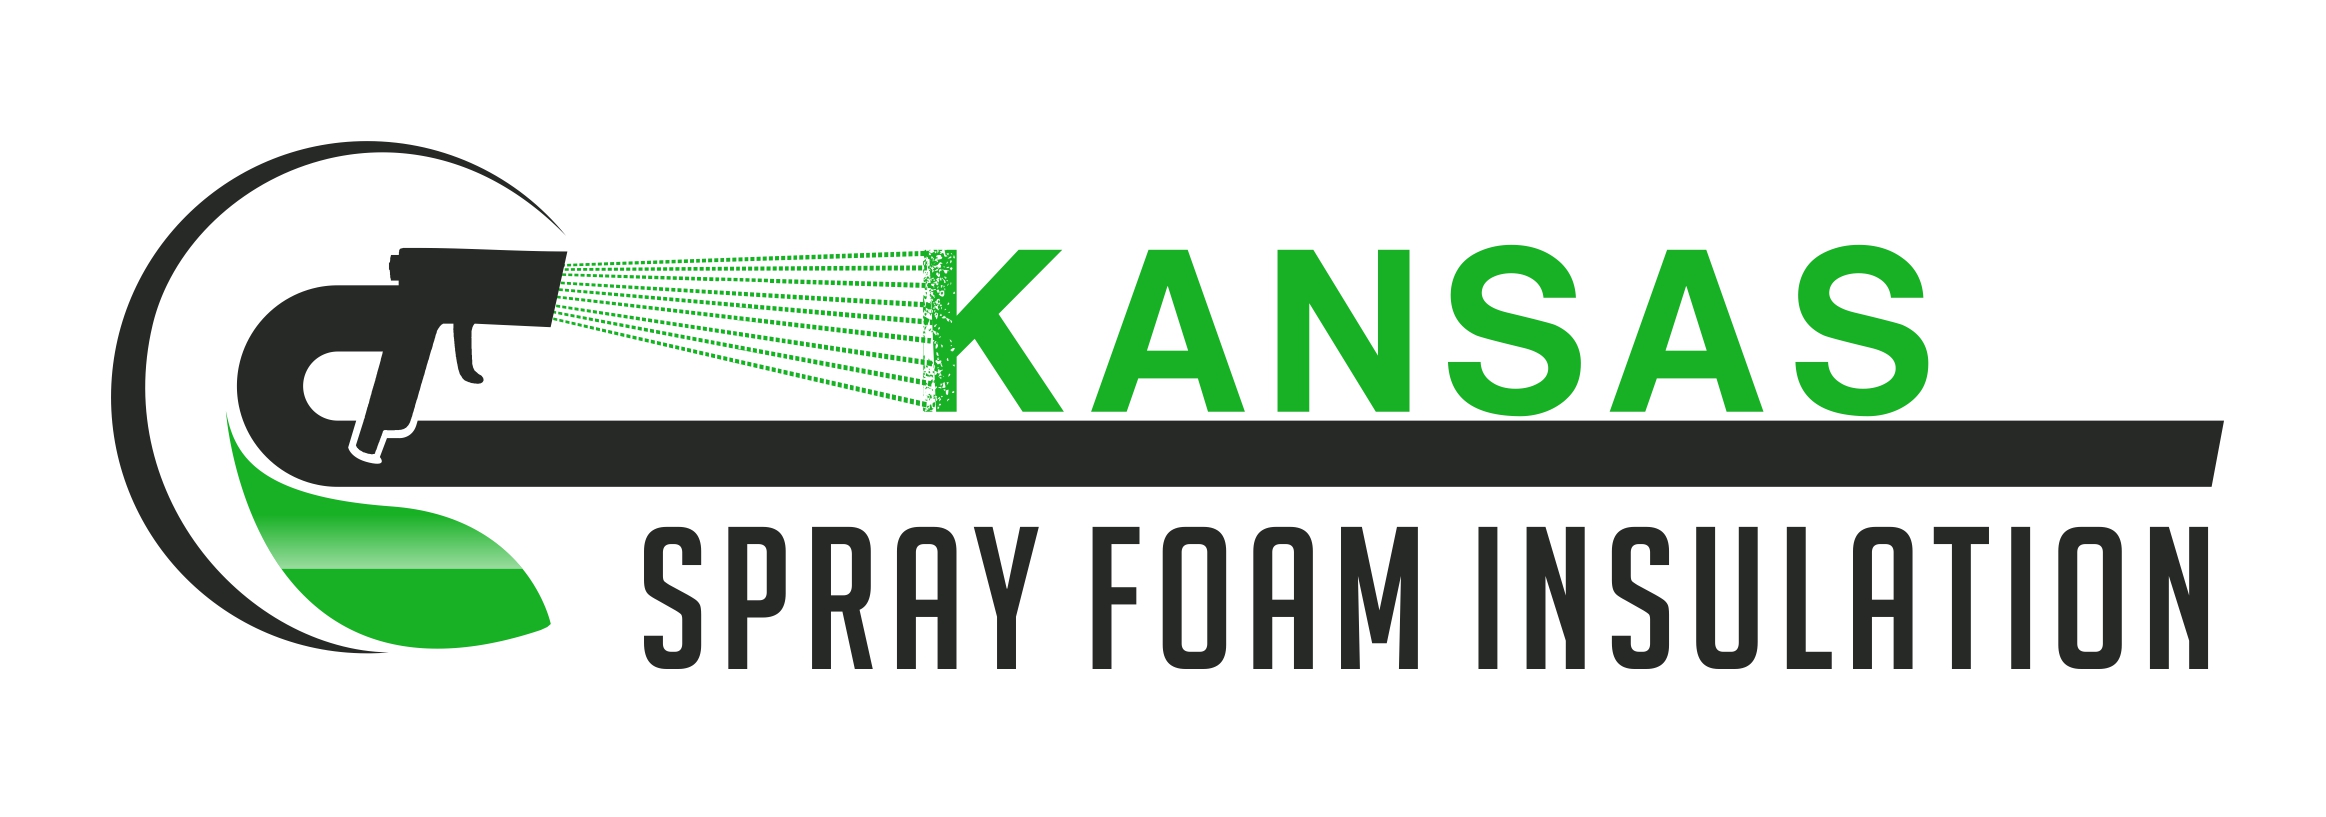 Kansas Spray Foam Insulation LLC company logo